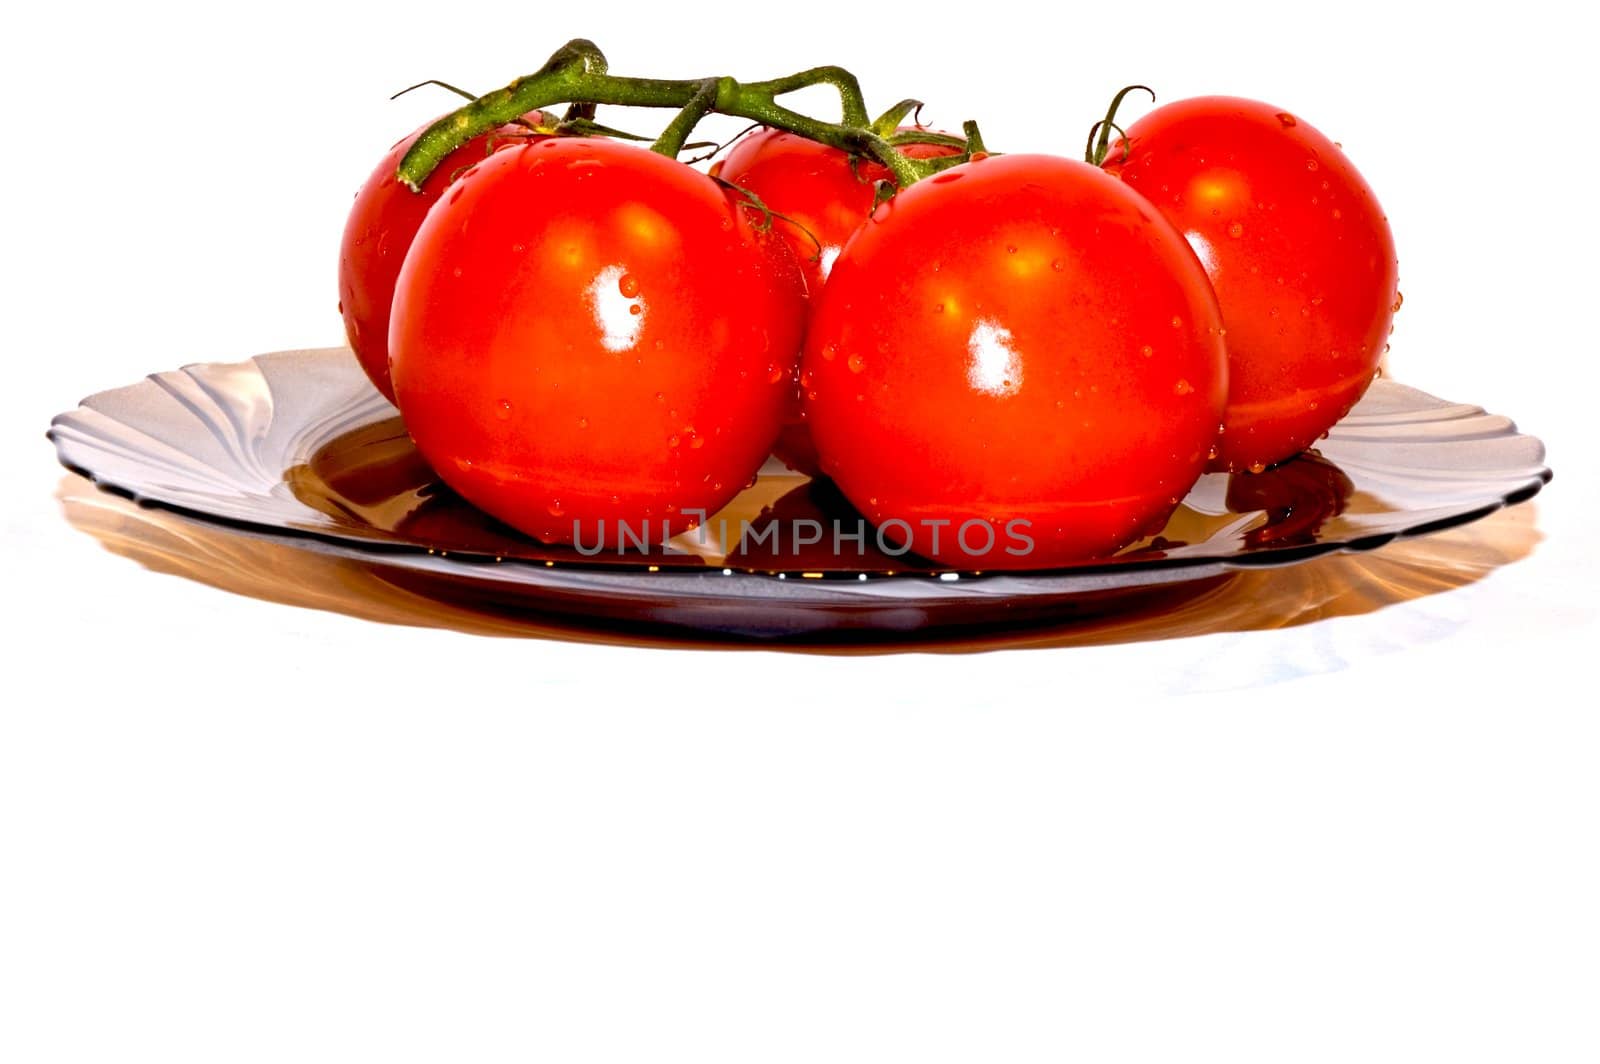 Tomato on plate by Michalowski